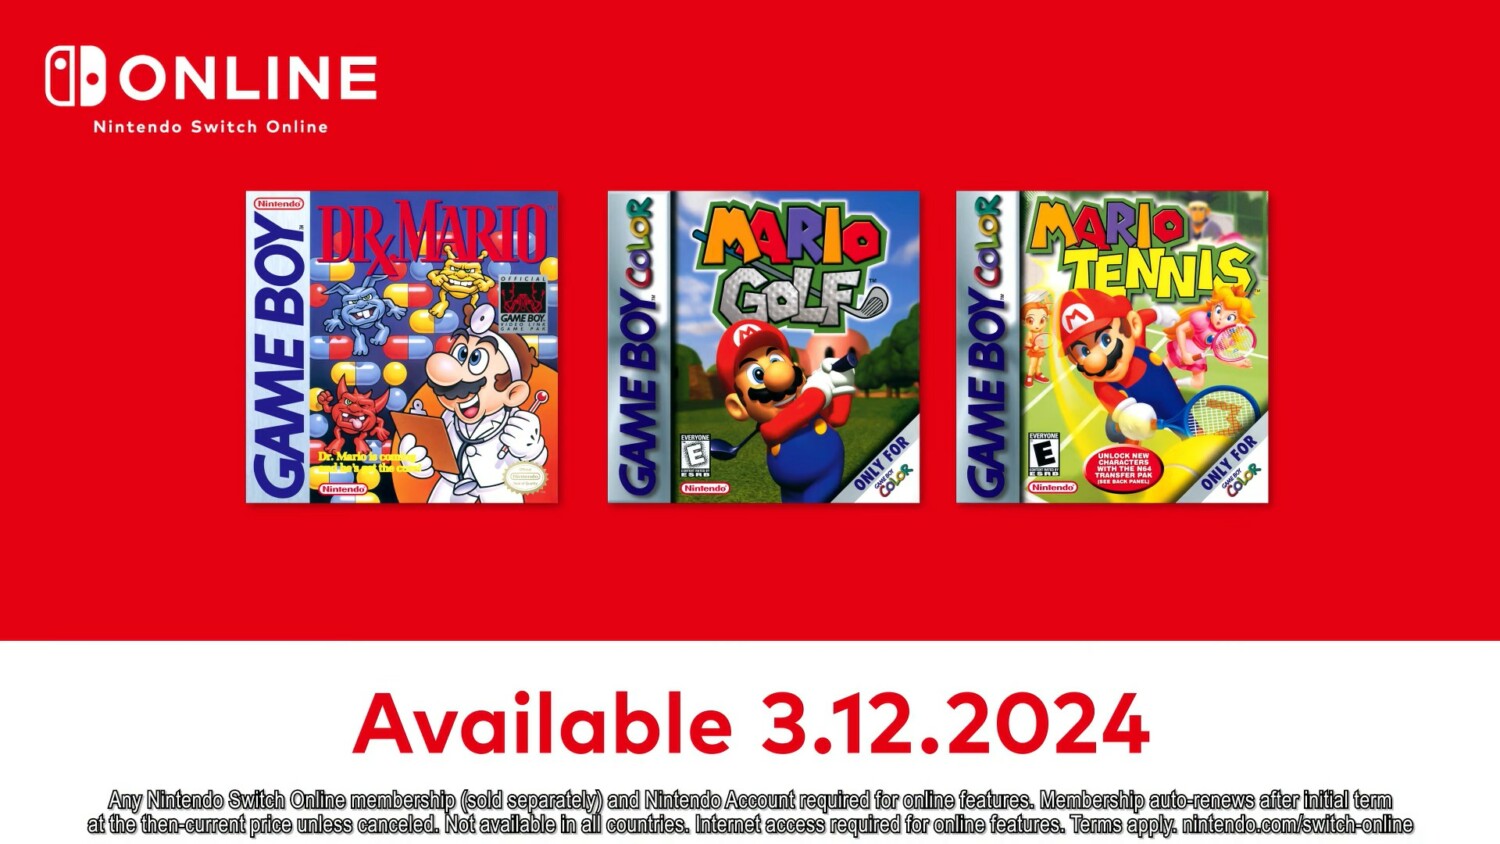 Dr Mario, Mario Golf, And Mario Tennis Coming To Switch Online Game Boy Catalogue